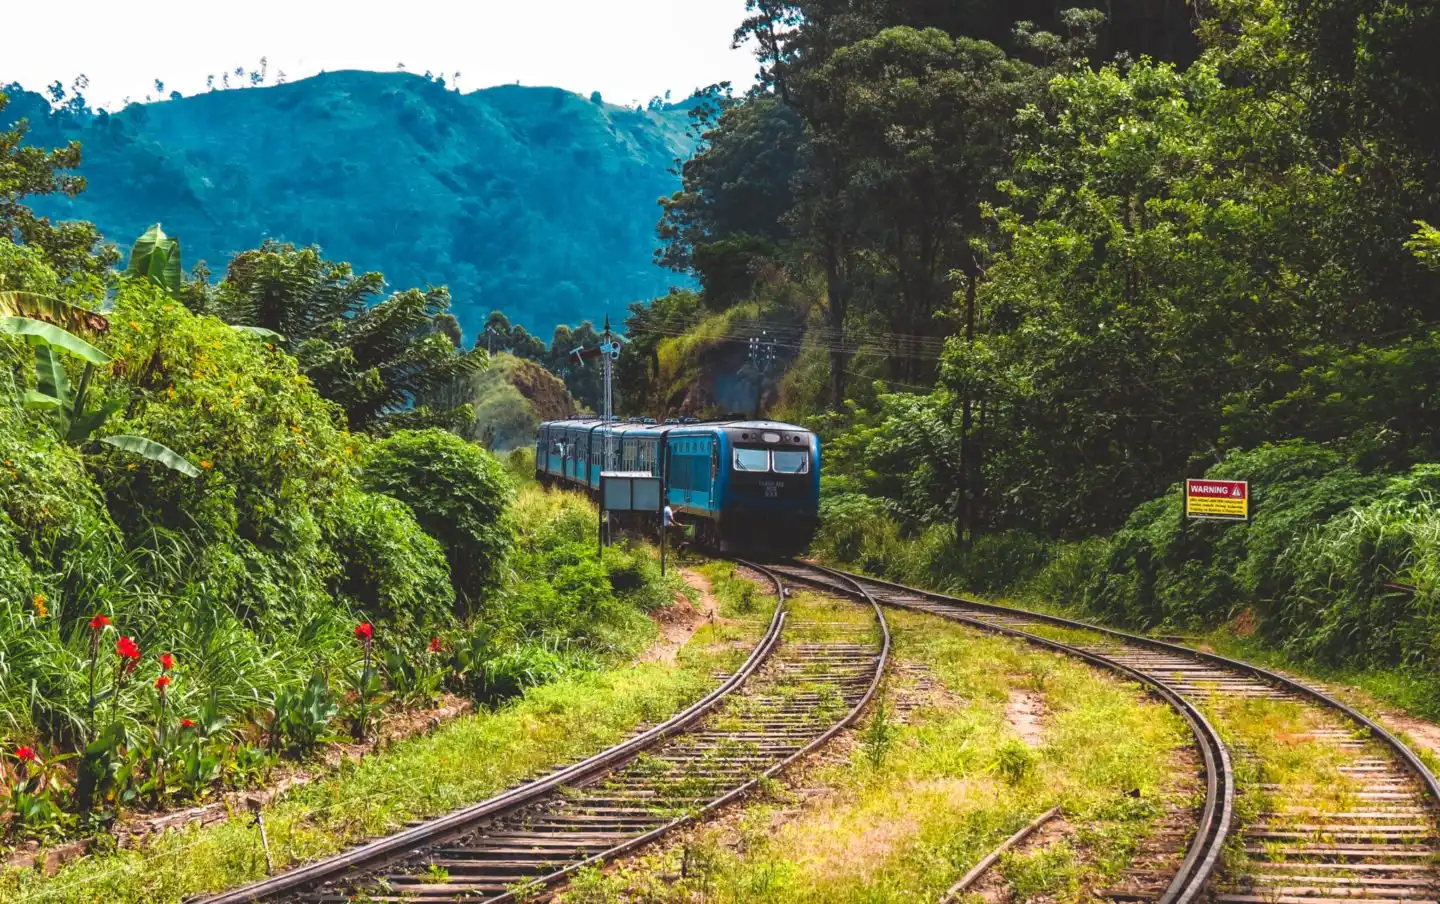 Train pulling into Ella Station, Sri Lanka